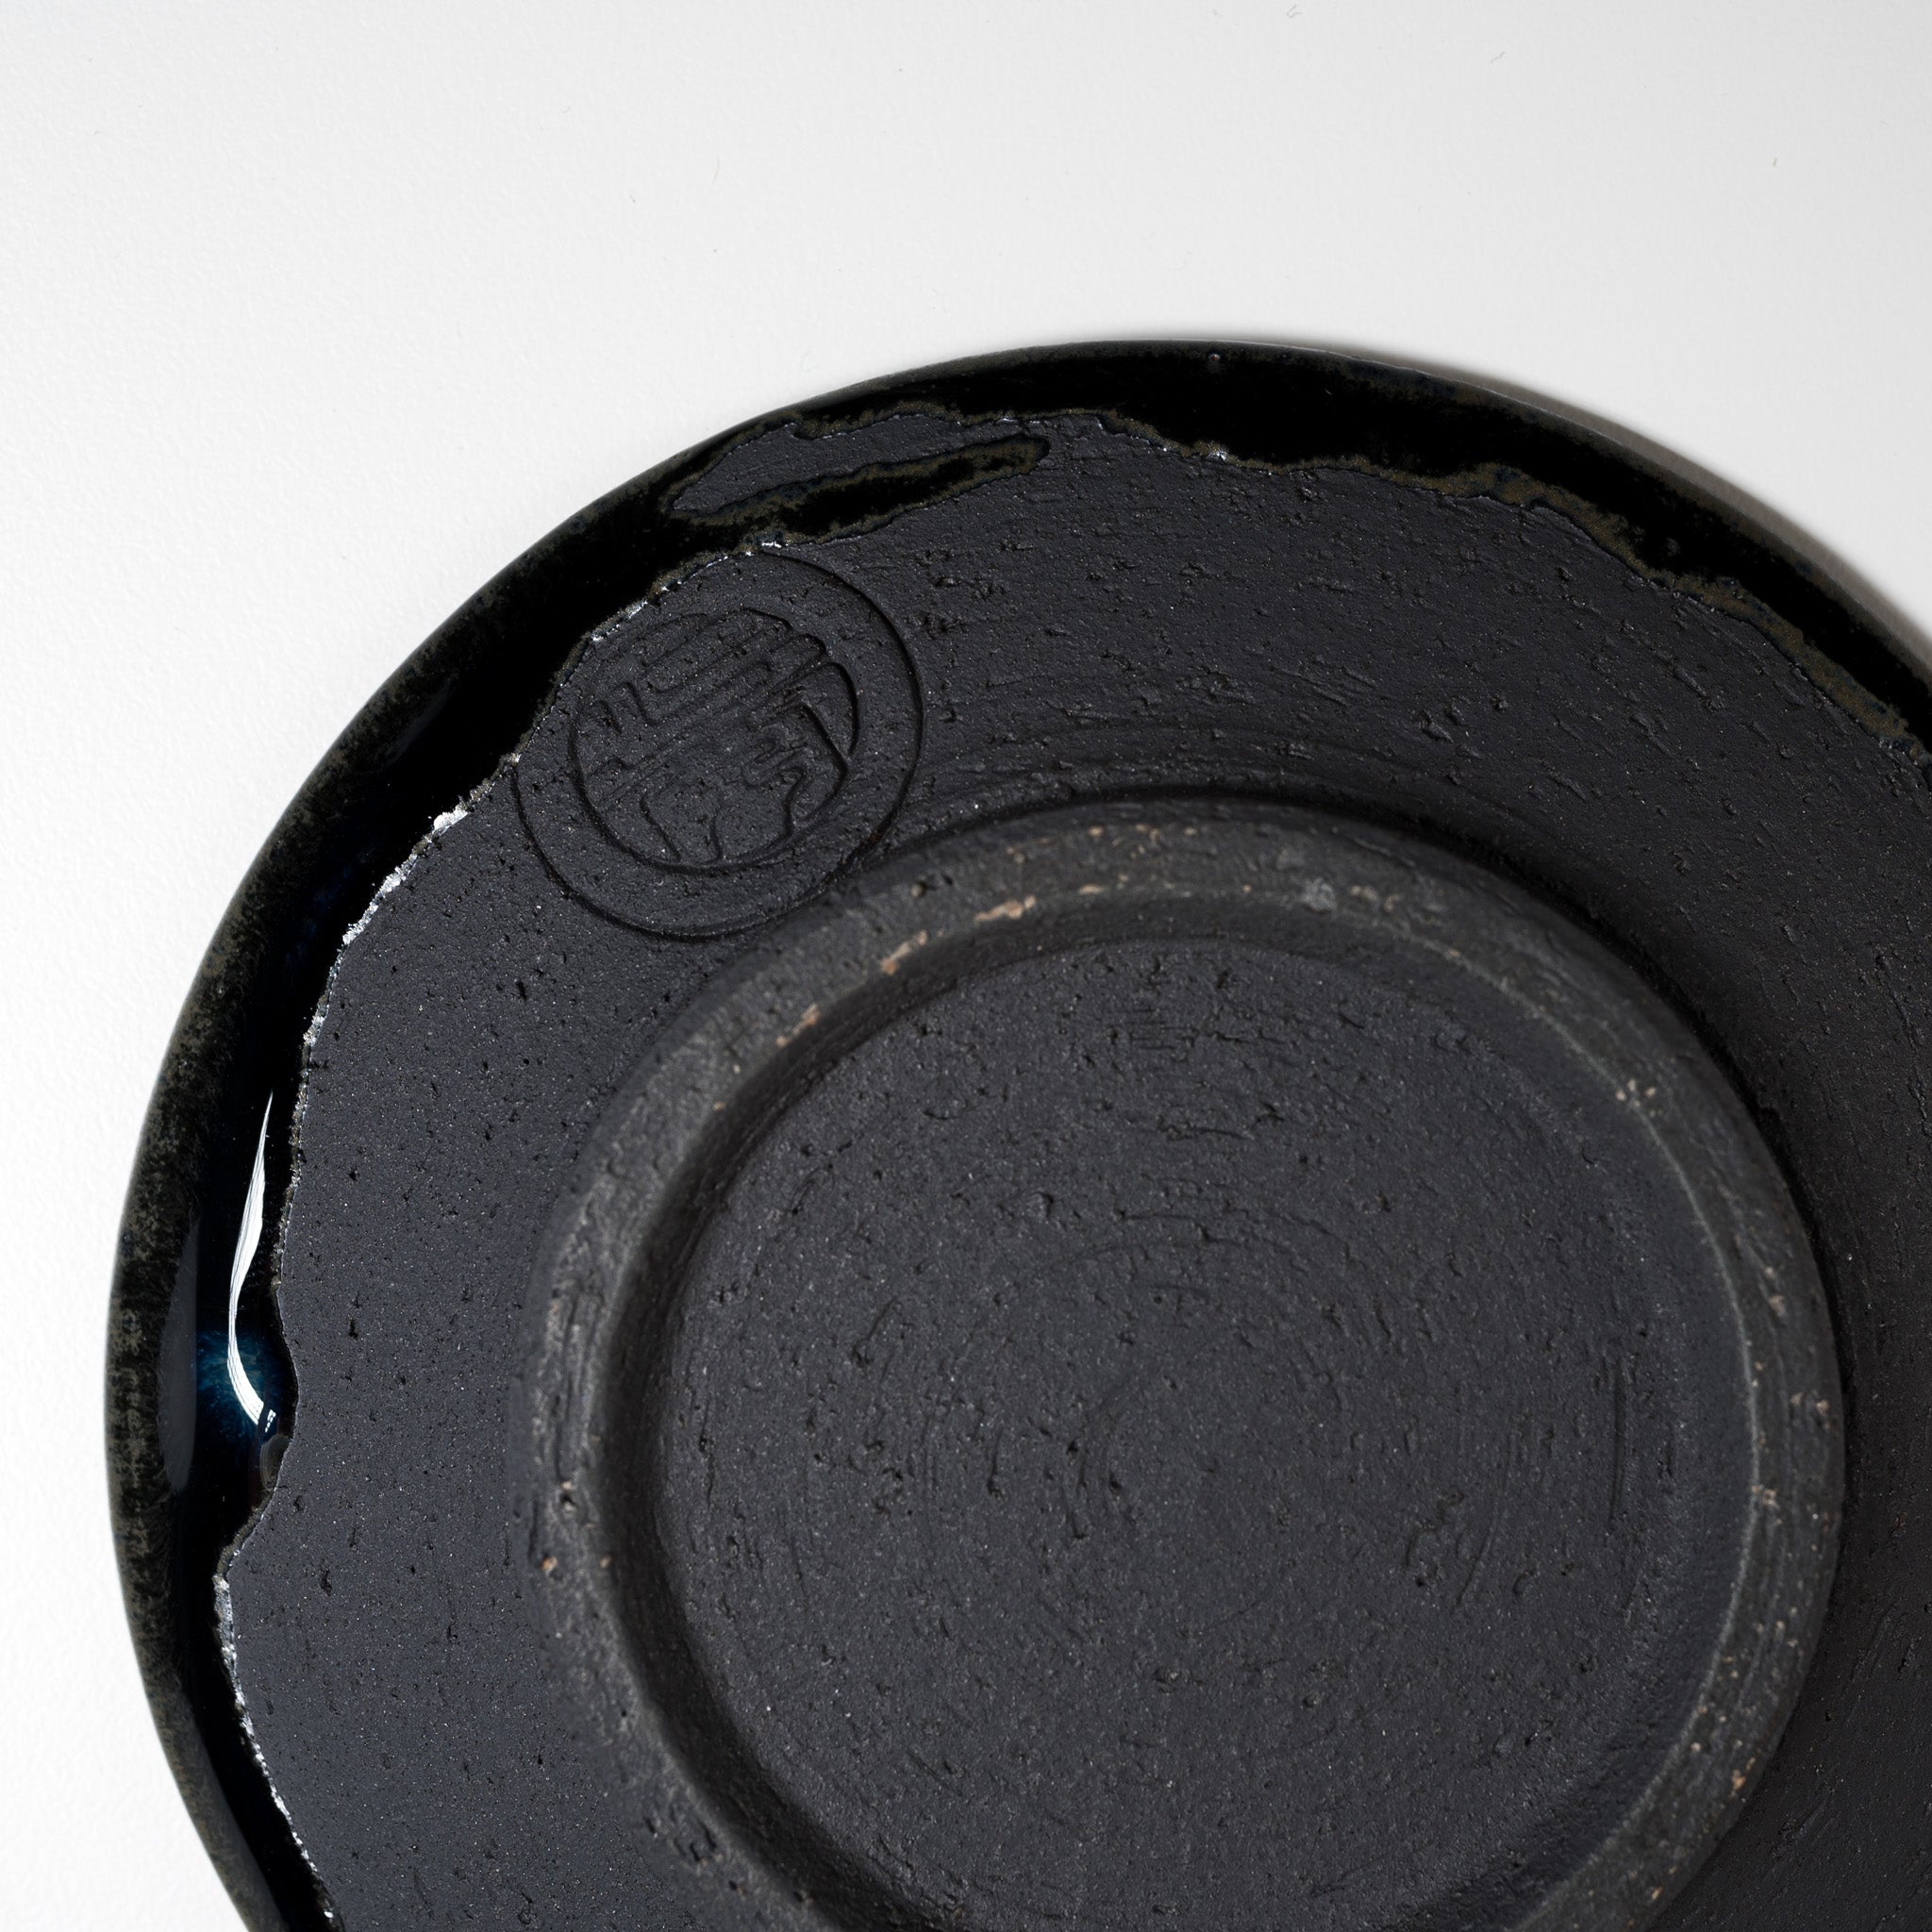 NINSHU Single Plate 13 cm - Charcoal Black / 墨黒